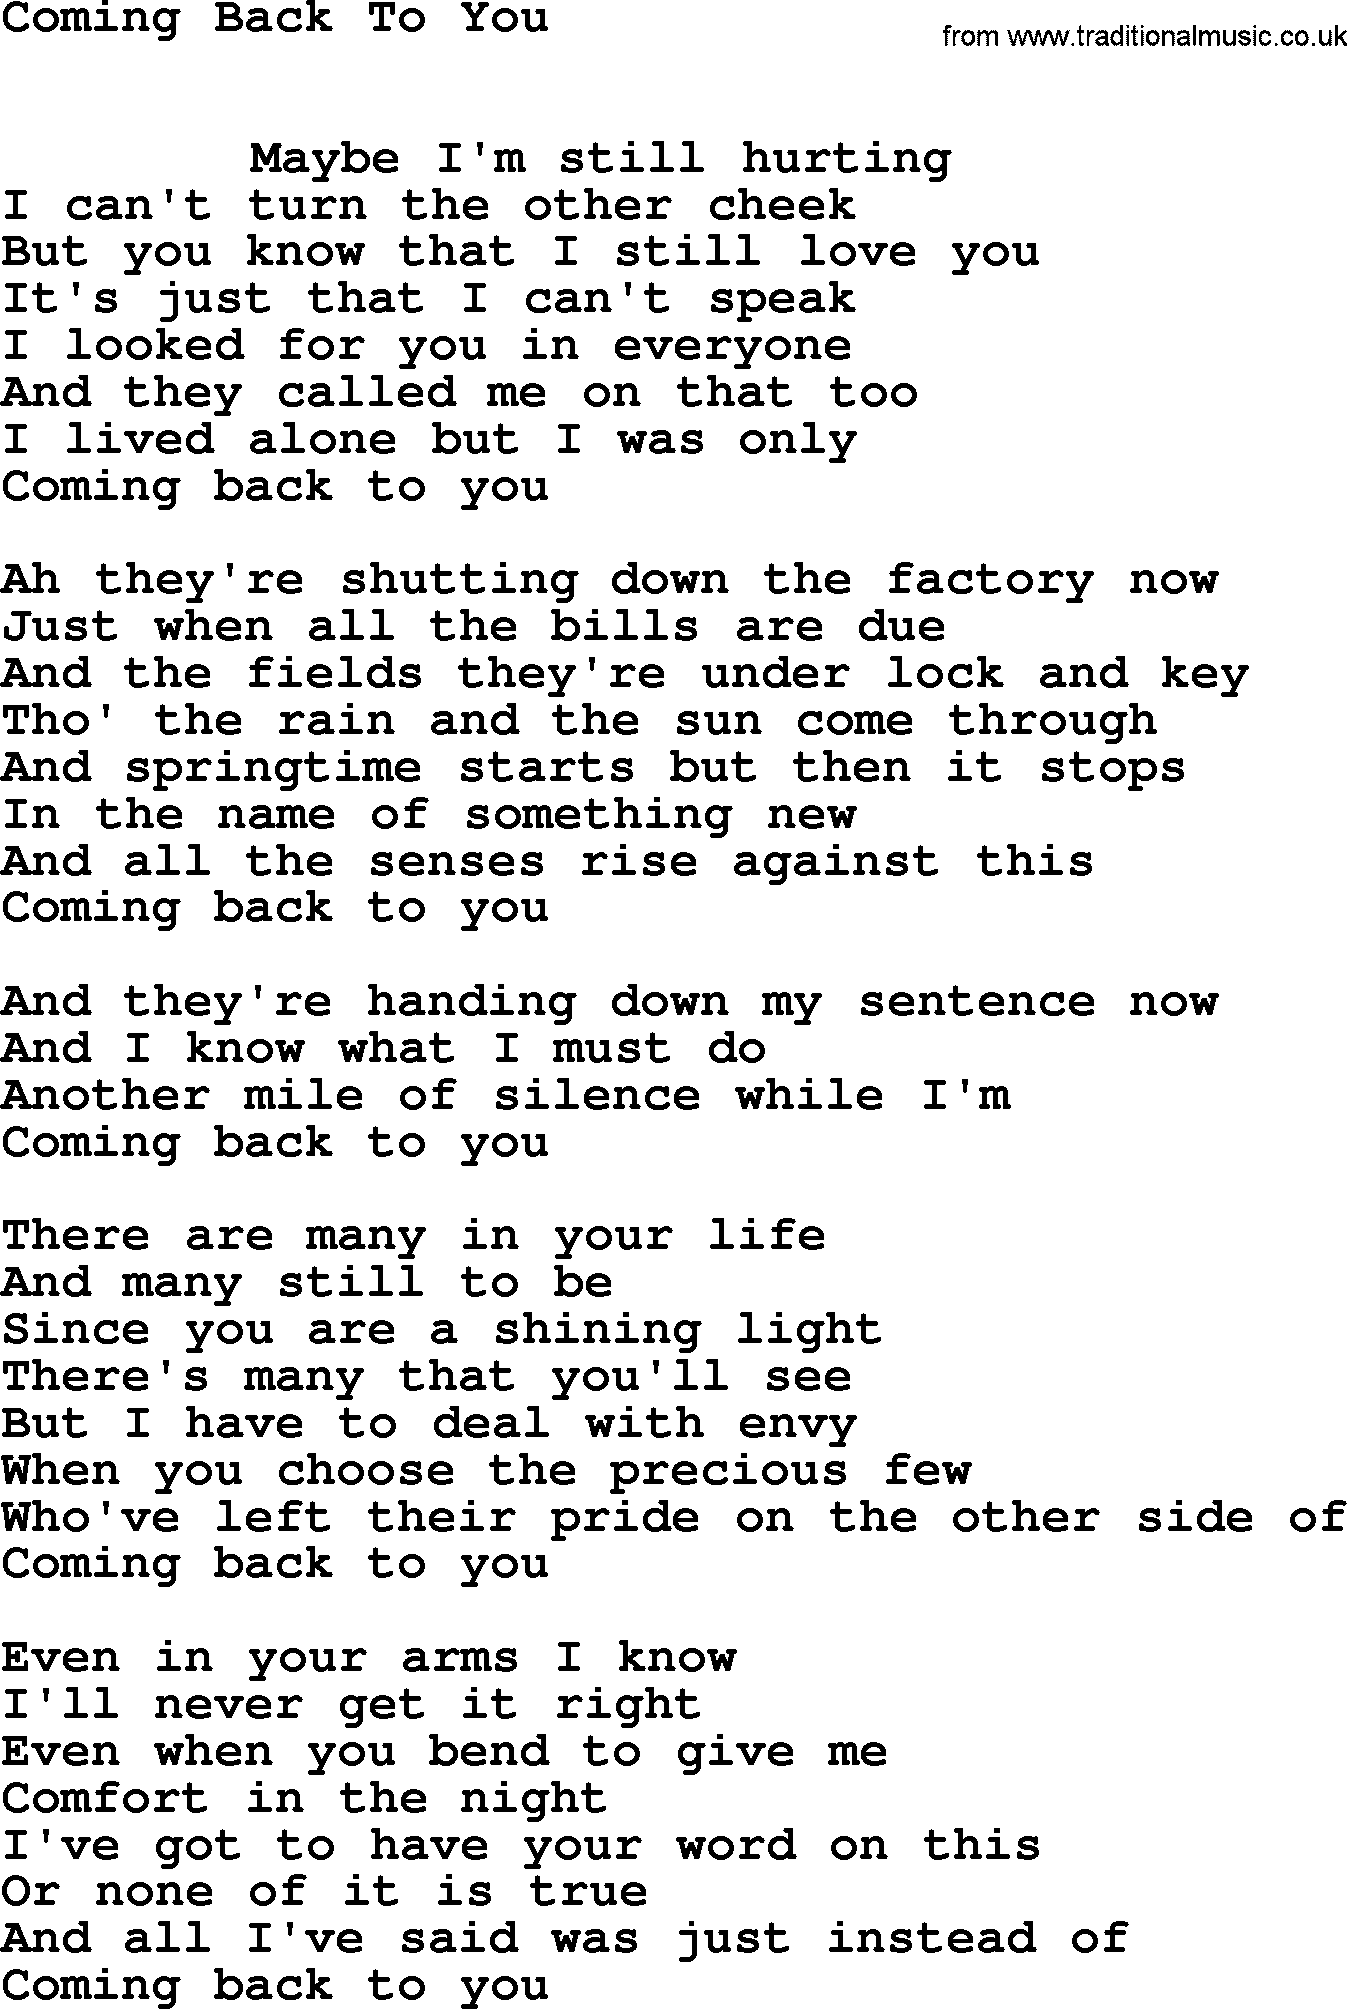 Leonard Cohen song Coming Back You-leonard-cohen.txt lyrics